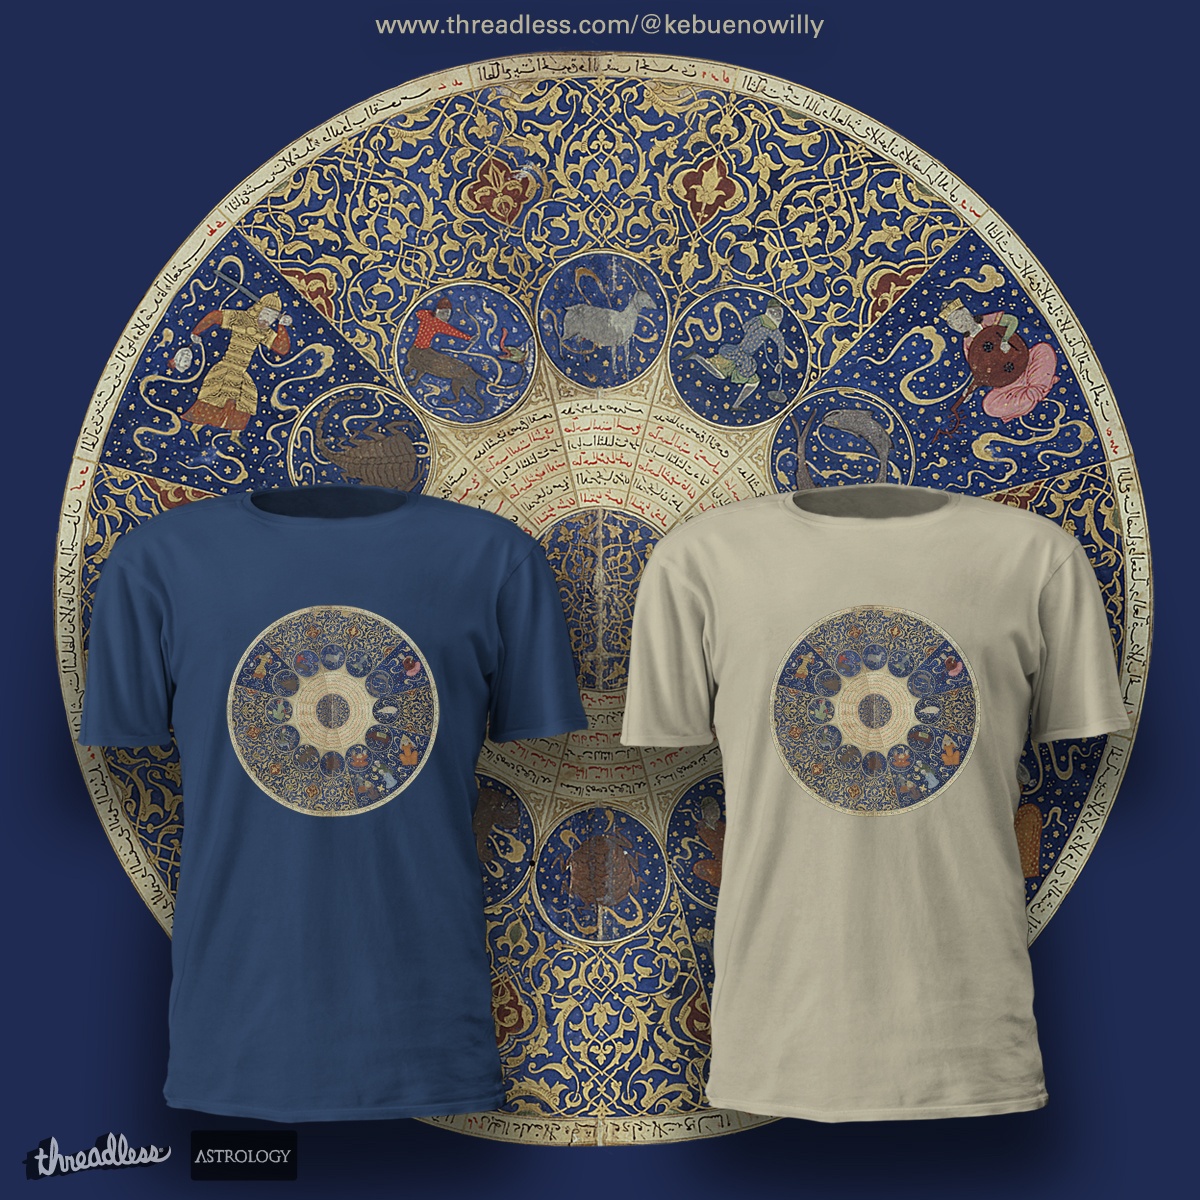 iskandar islamid islam Horoscope t-shirt Threadless